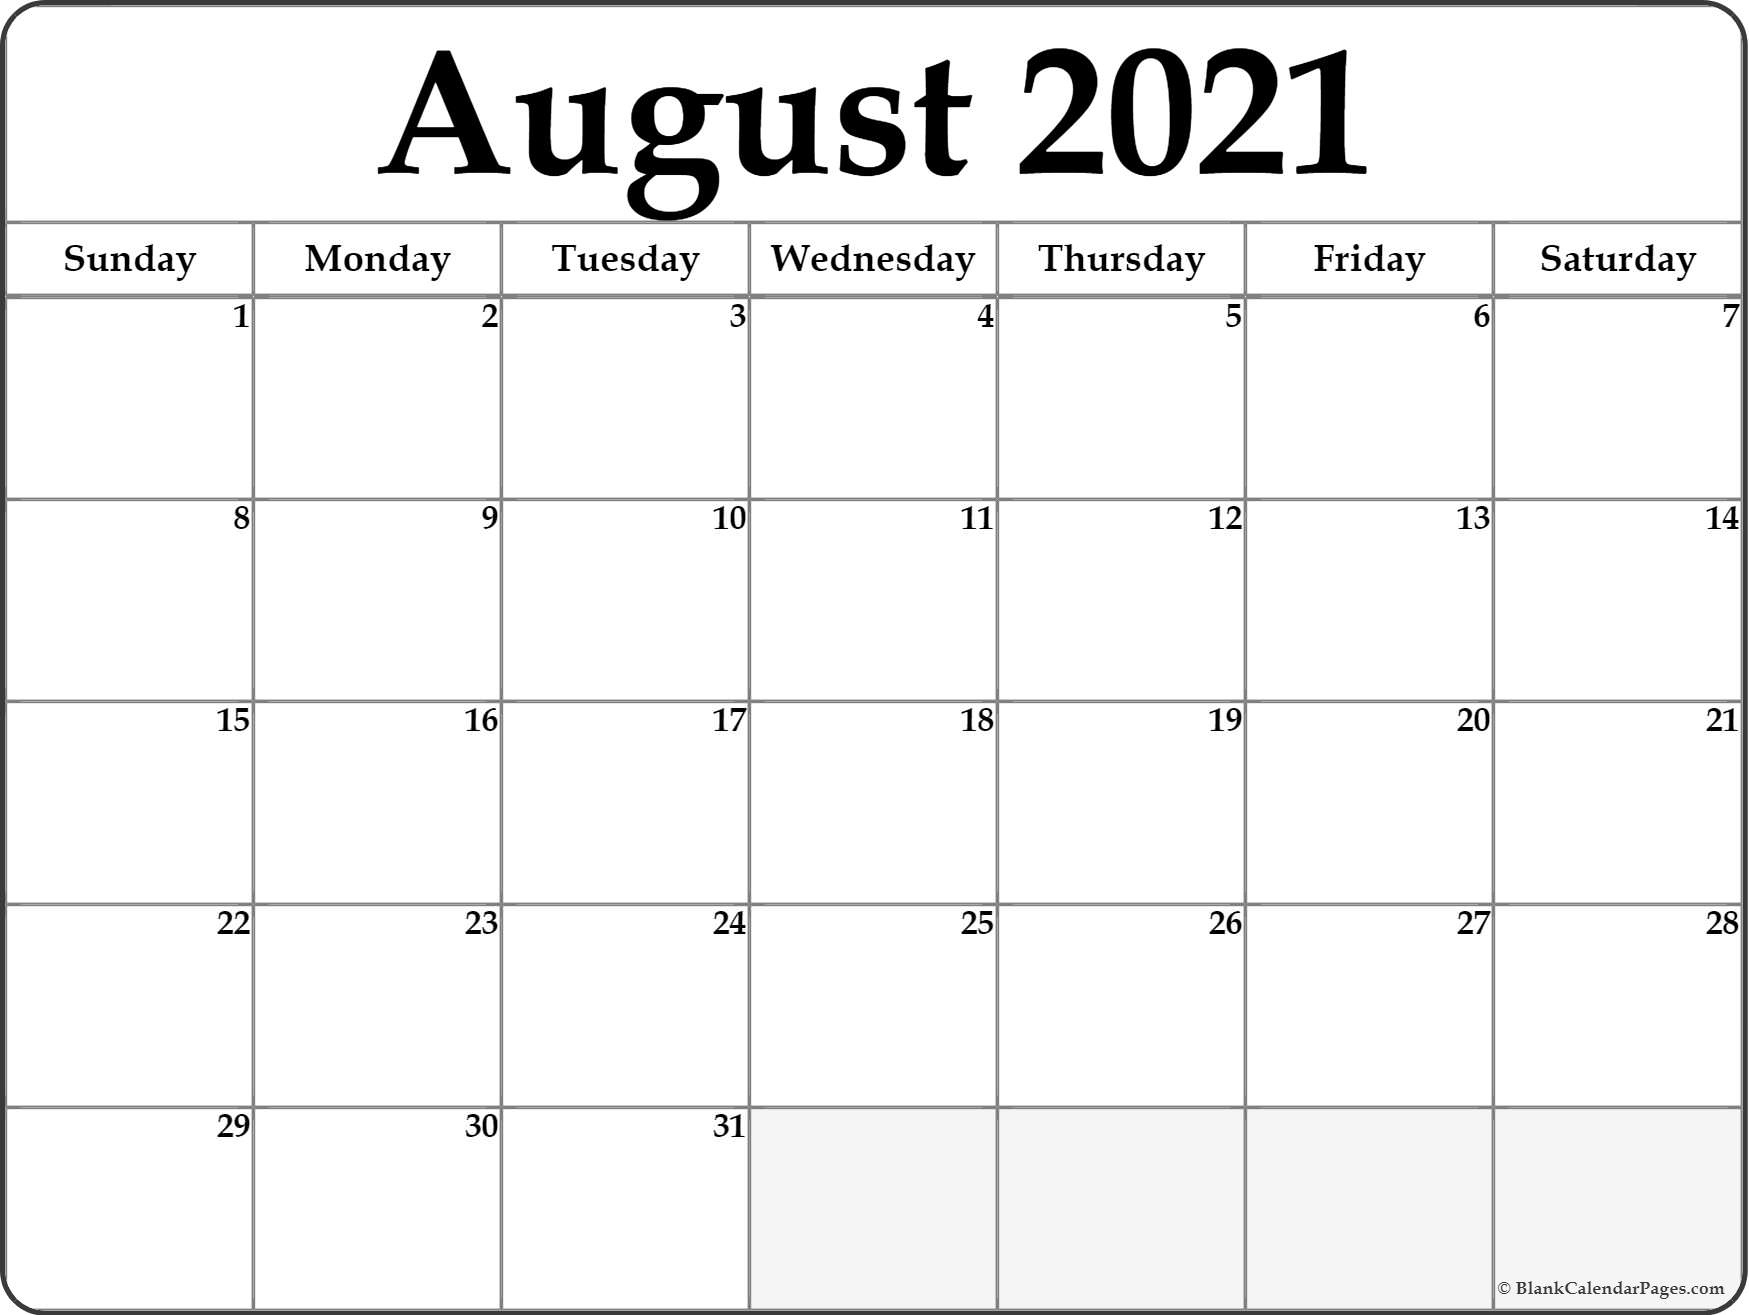 August 2021 Calendar | Free Printable Calendar August 2021 Calendar Quotes